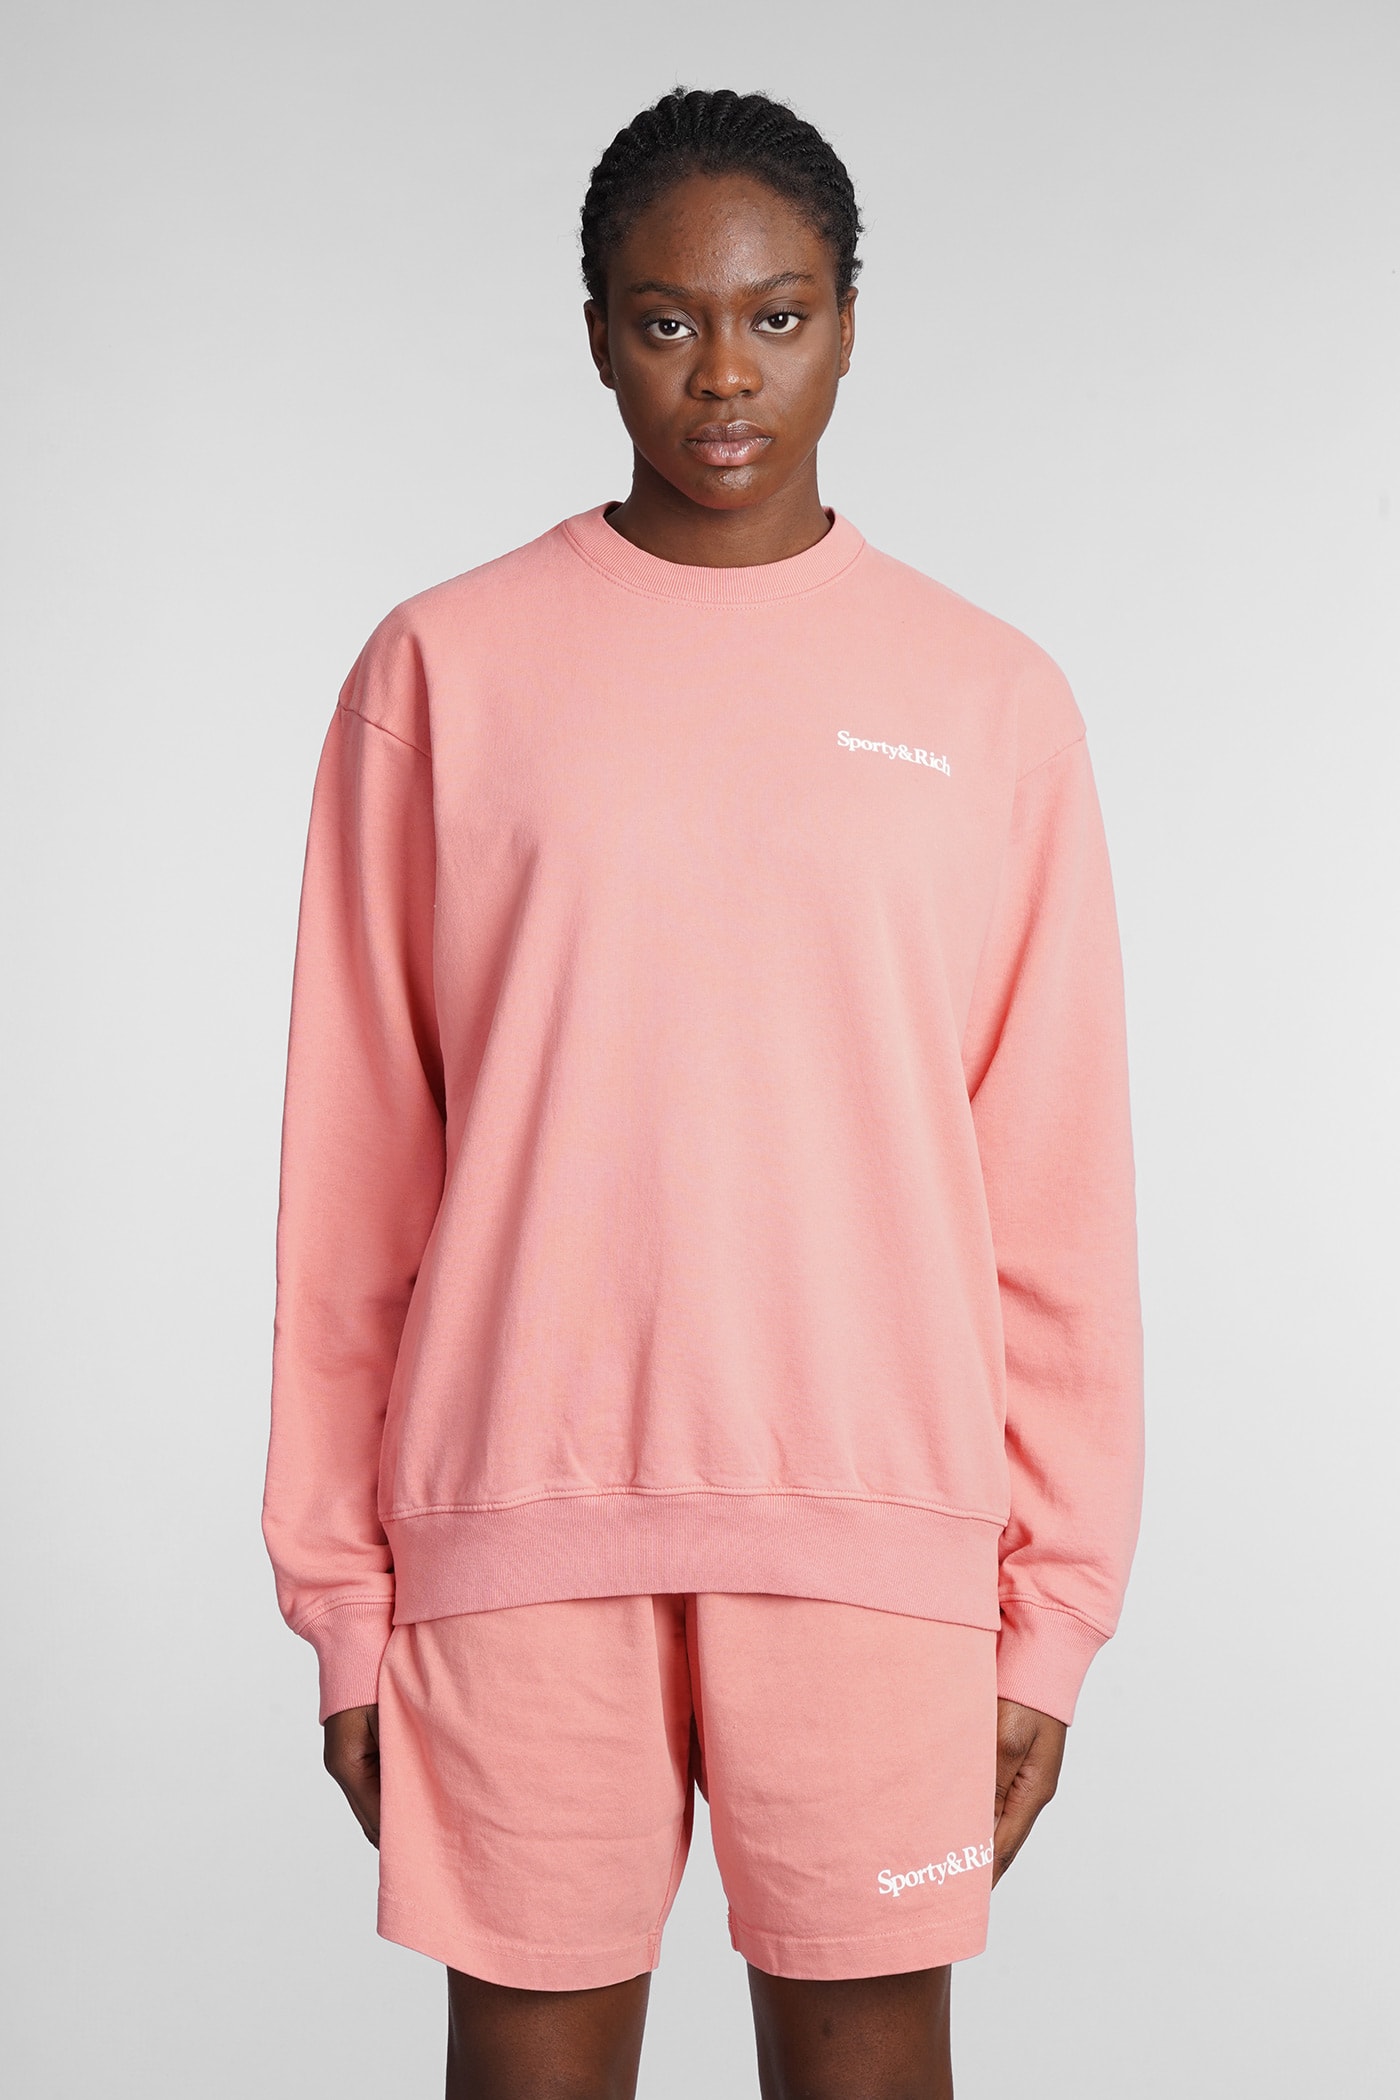 Sporty & Rich Sweatshirt In Rose-pink Cotton